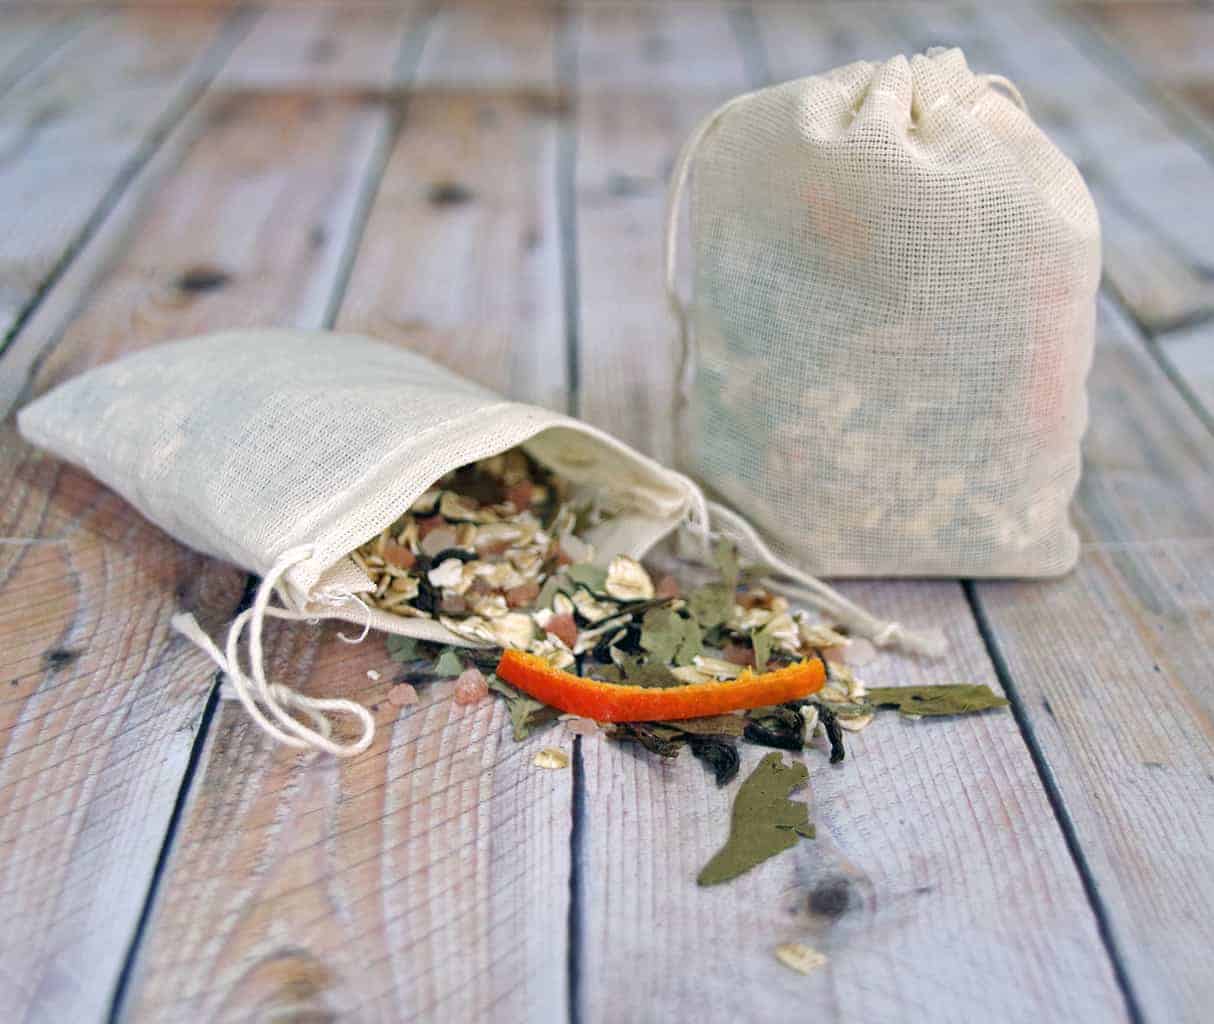 Herbs in a teabag.